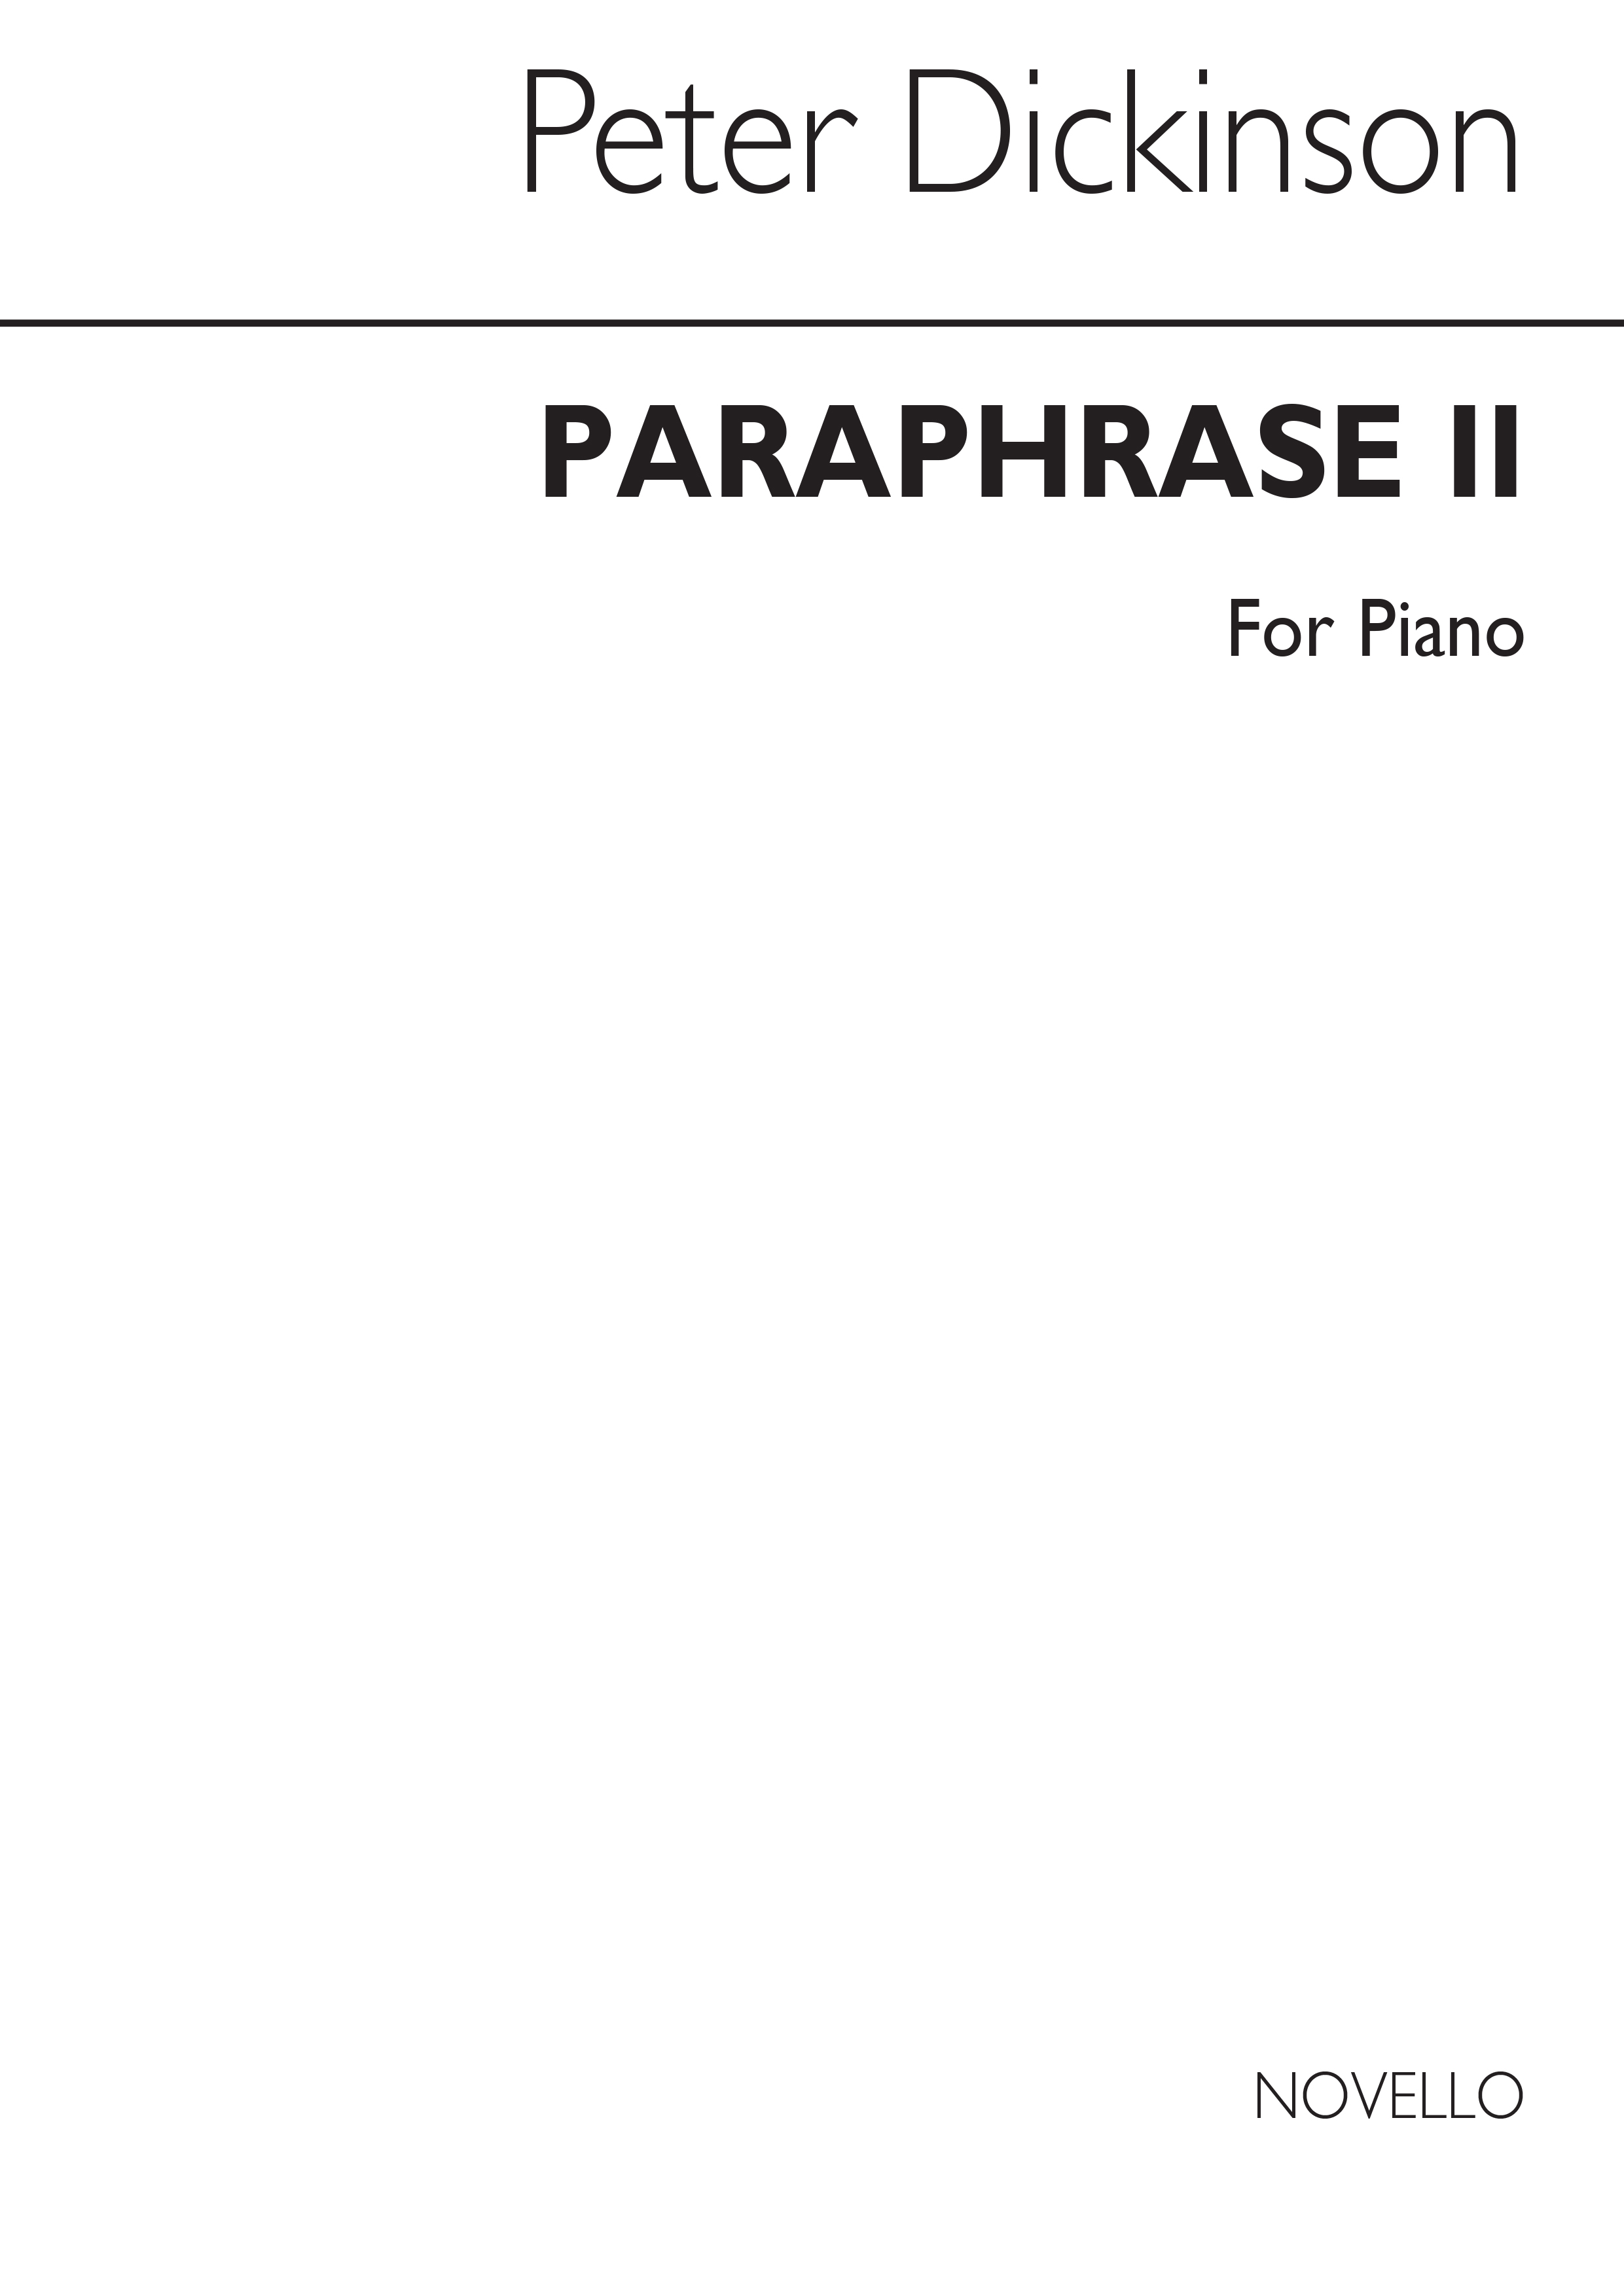 Peter Dickinson: Paraphrase 2 For Piano Solo